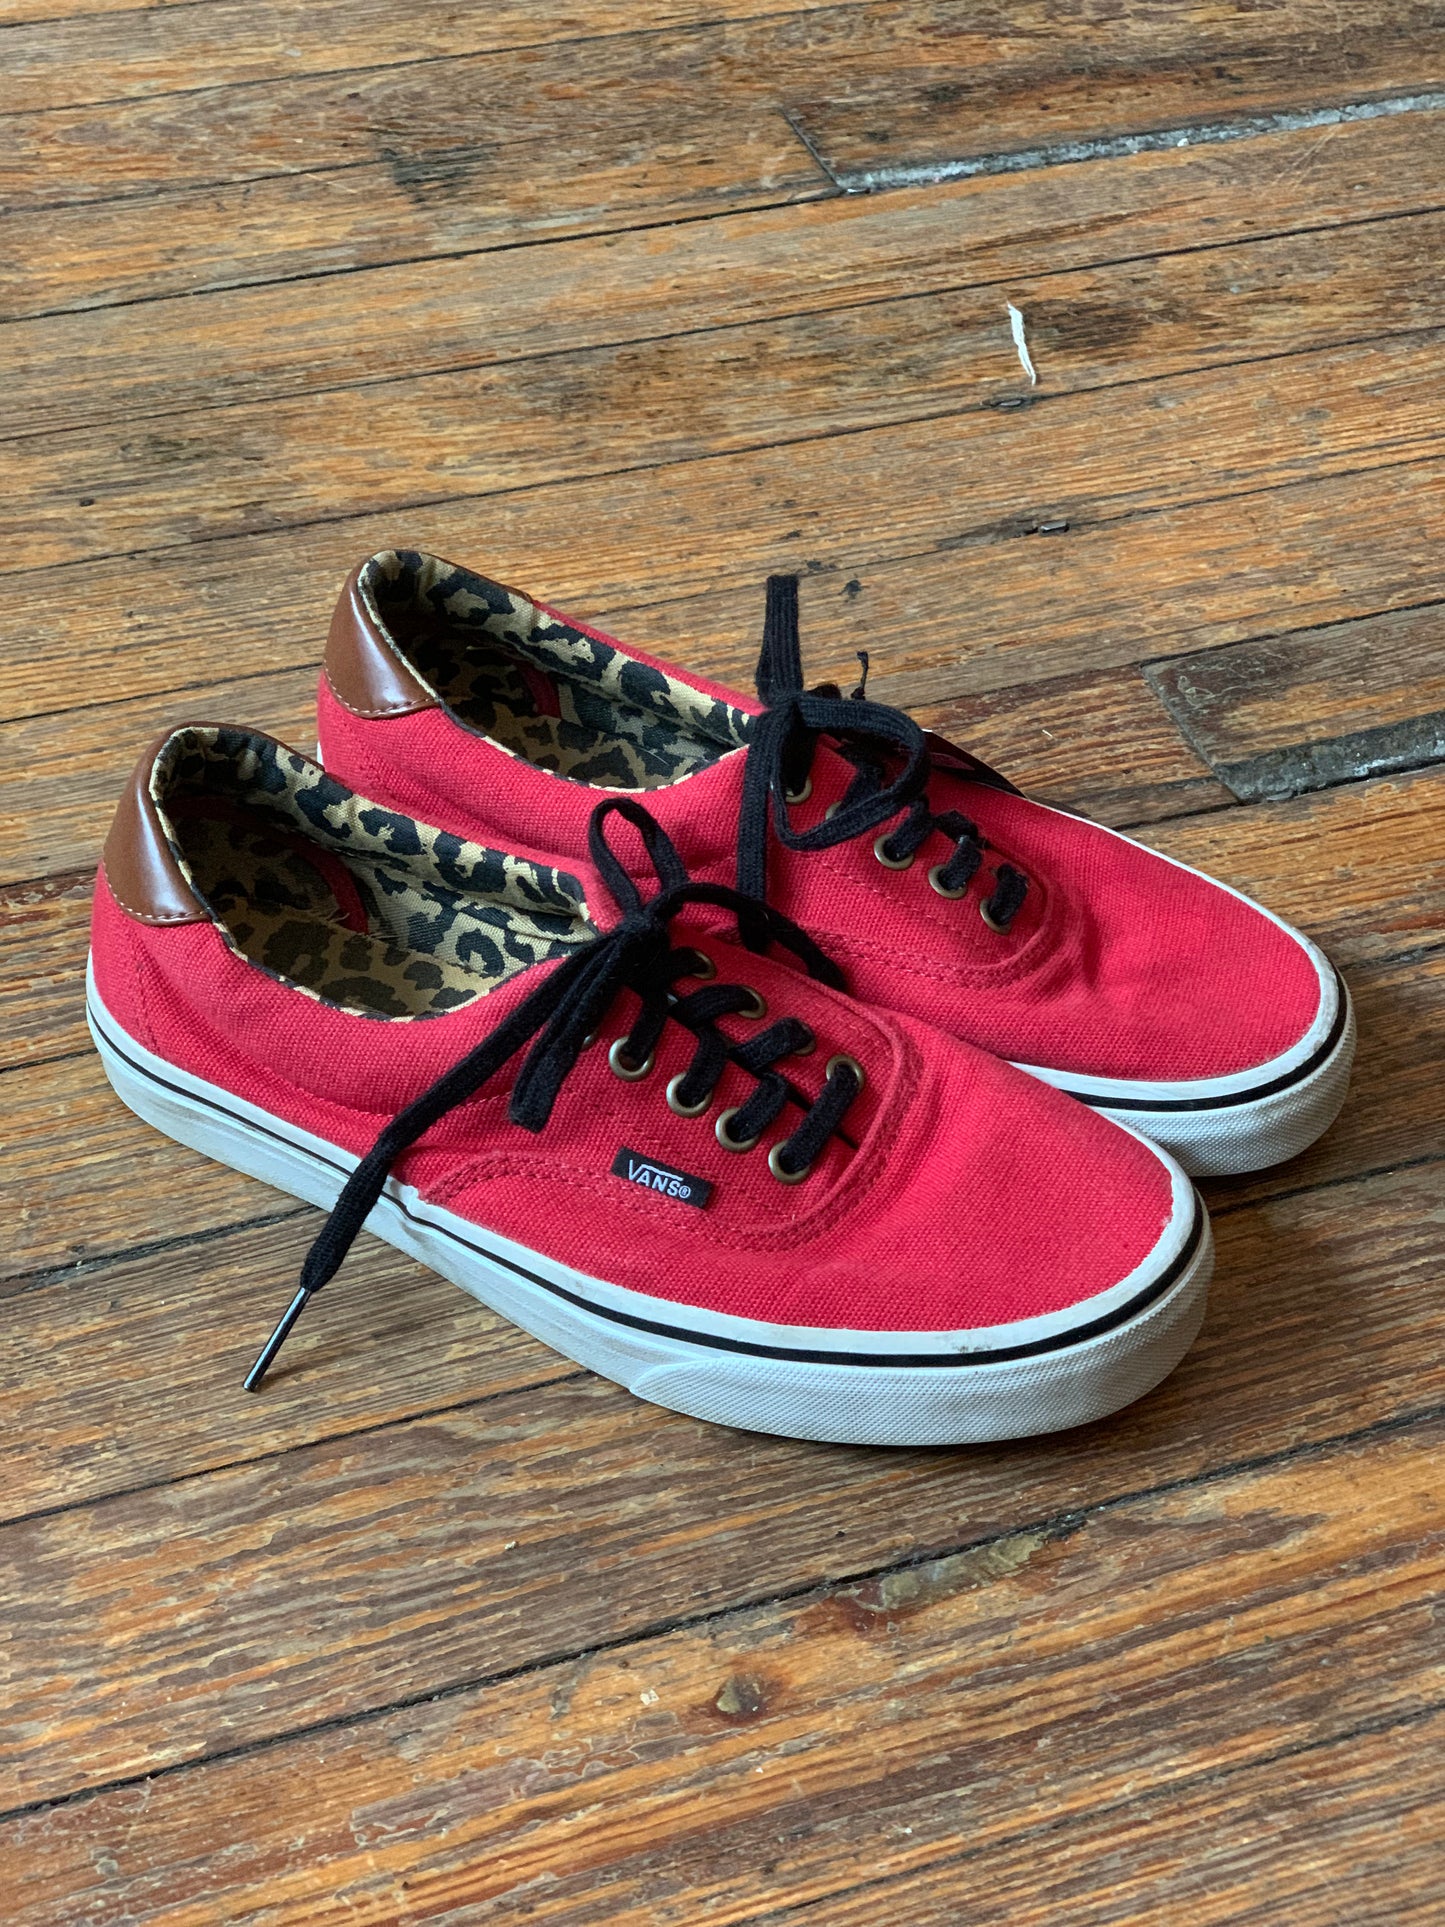 Vans Era 59 Red And Leopard Print Sneakers